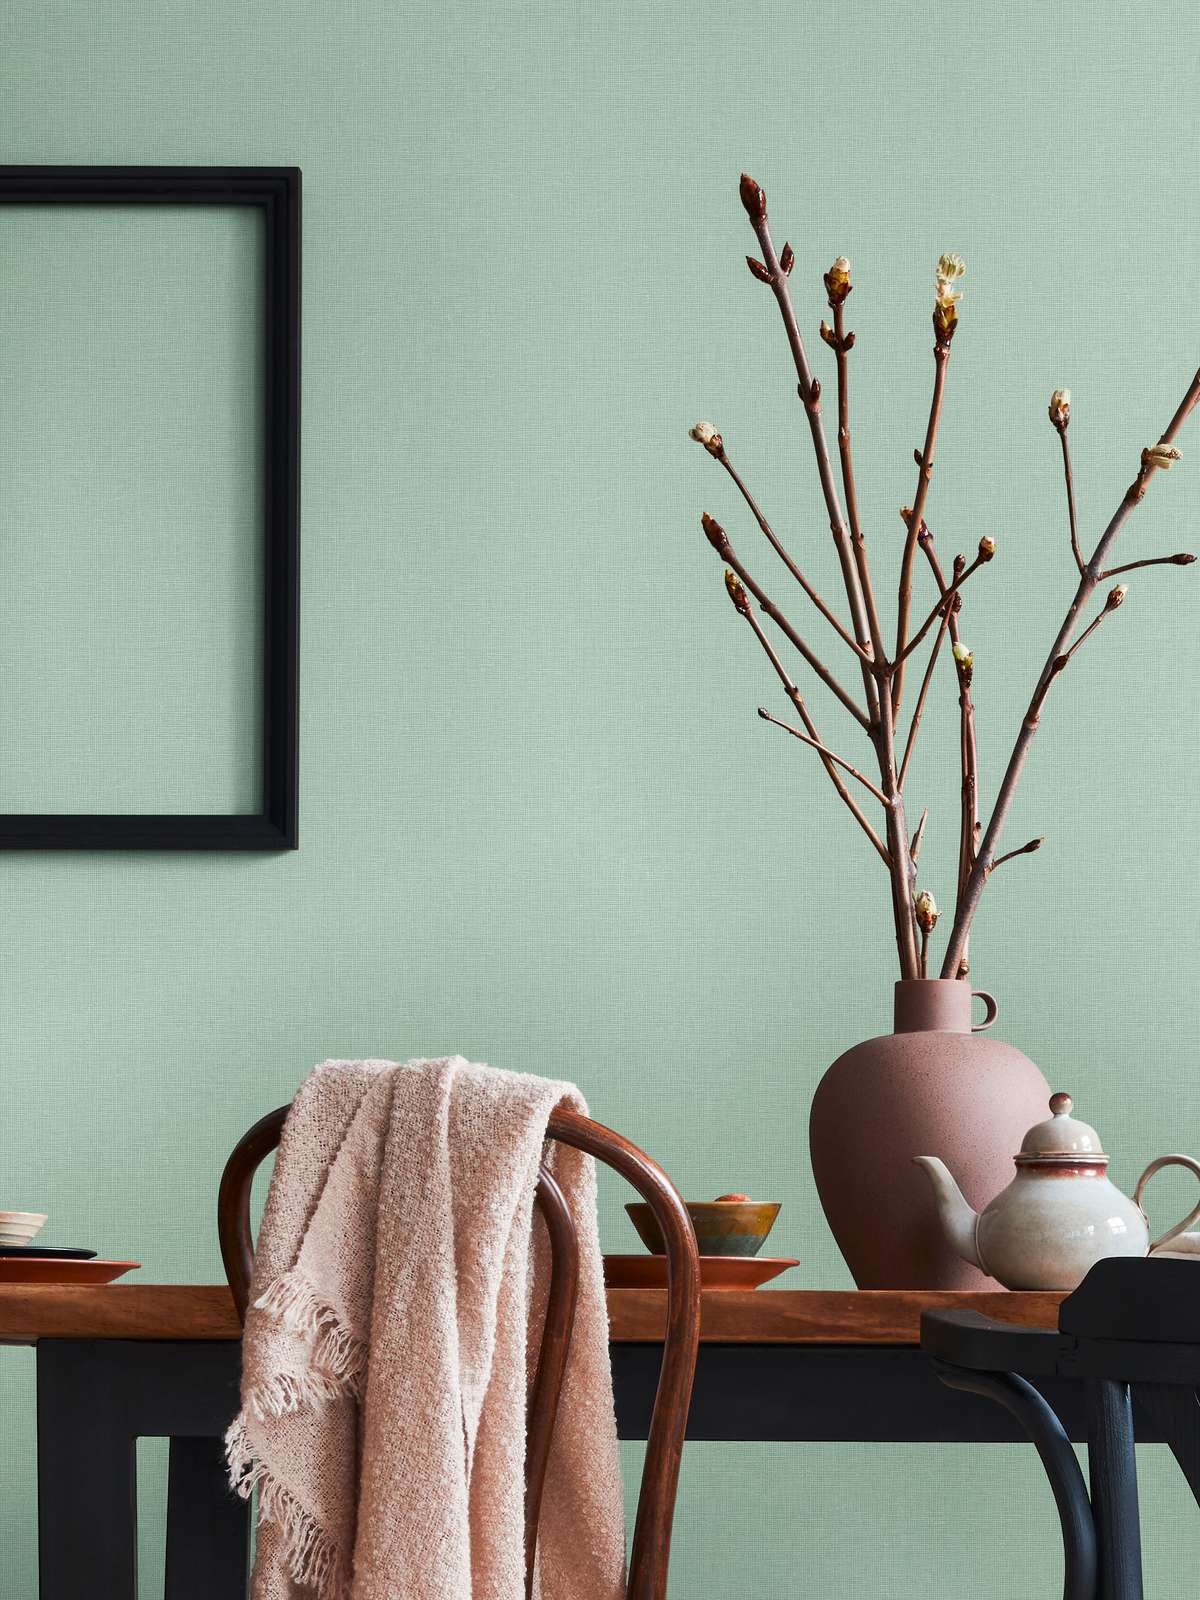             Non-woven wallpaper plain with linen texture - green
        